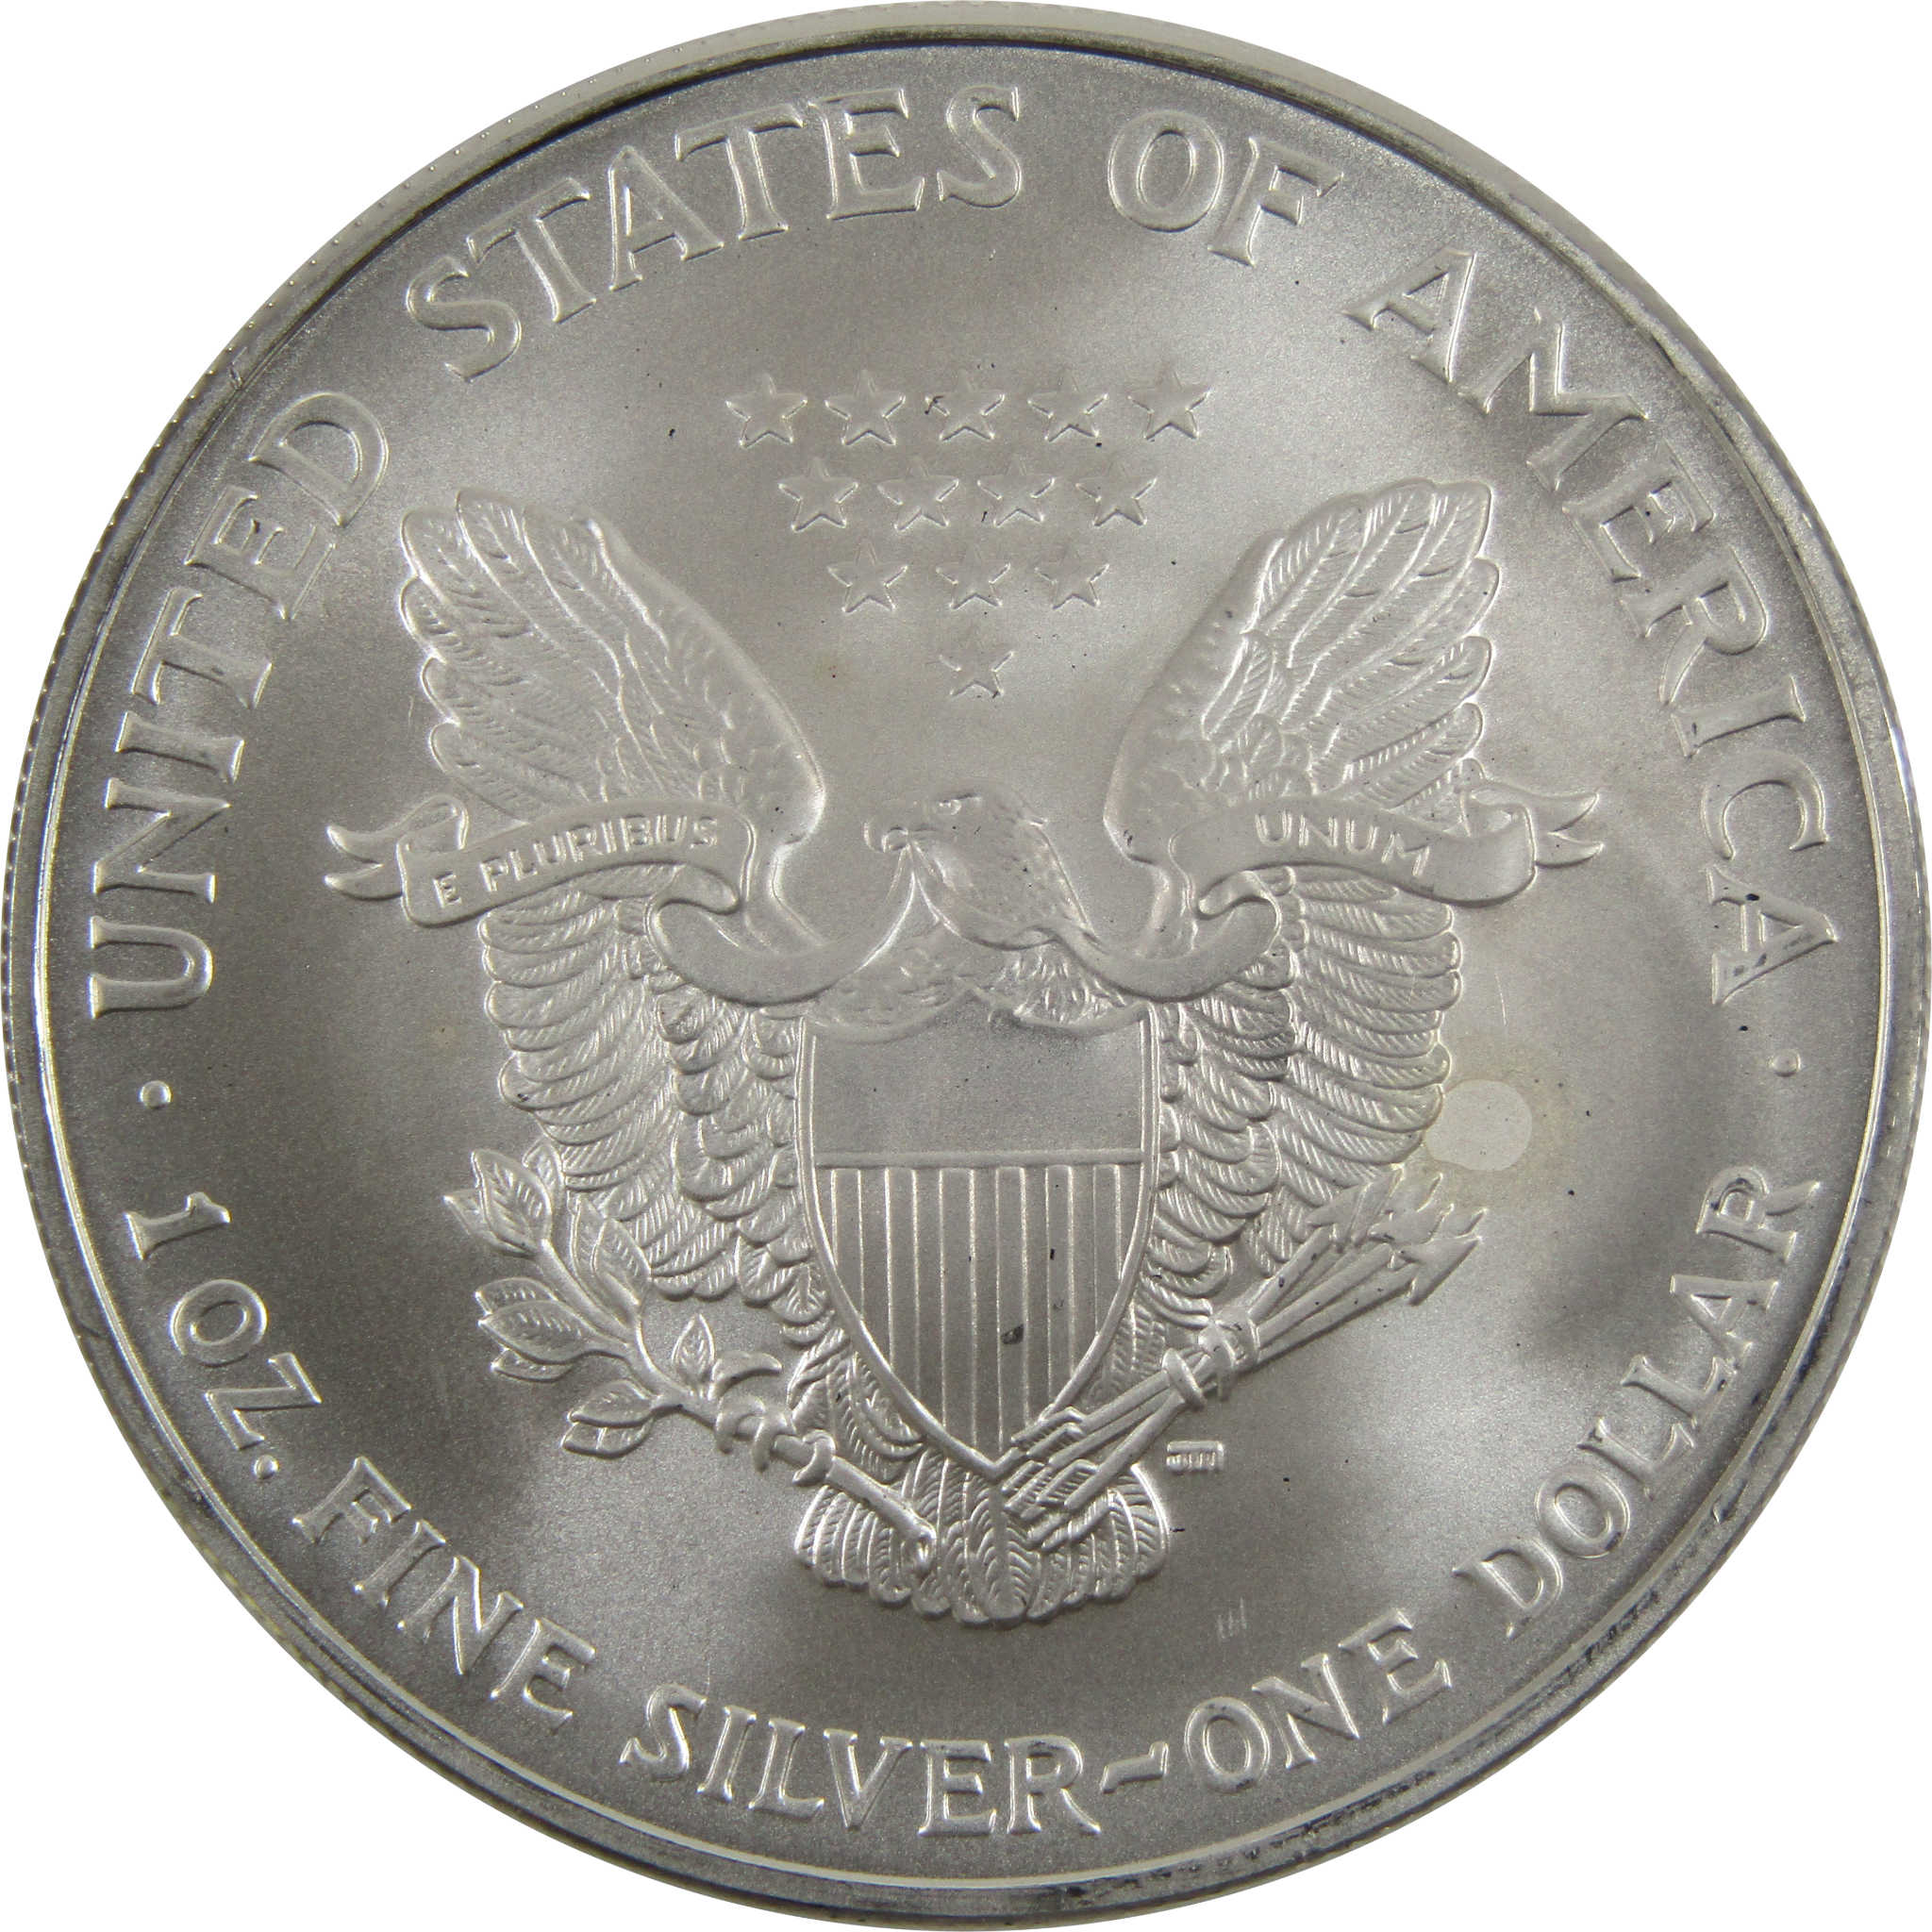 2006 American Eagle BU Uncirculated 1 oz .999 Silver Bullion $1 Coin